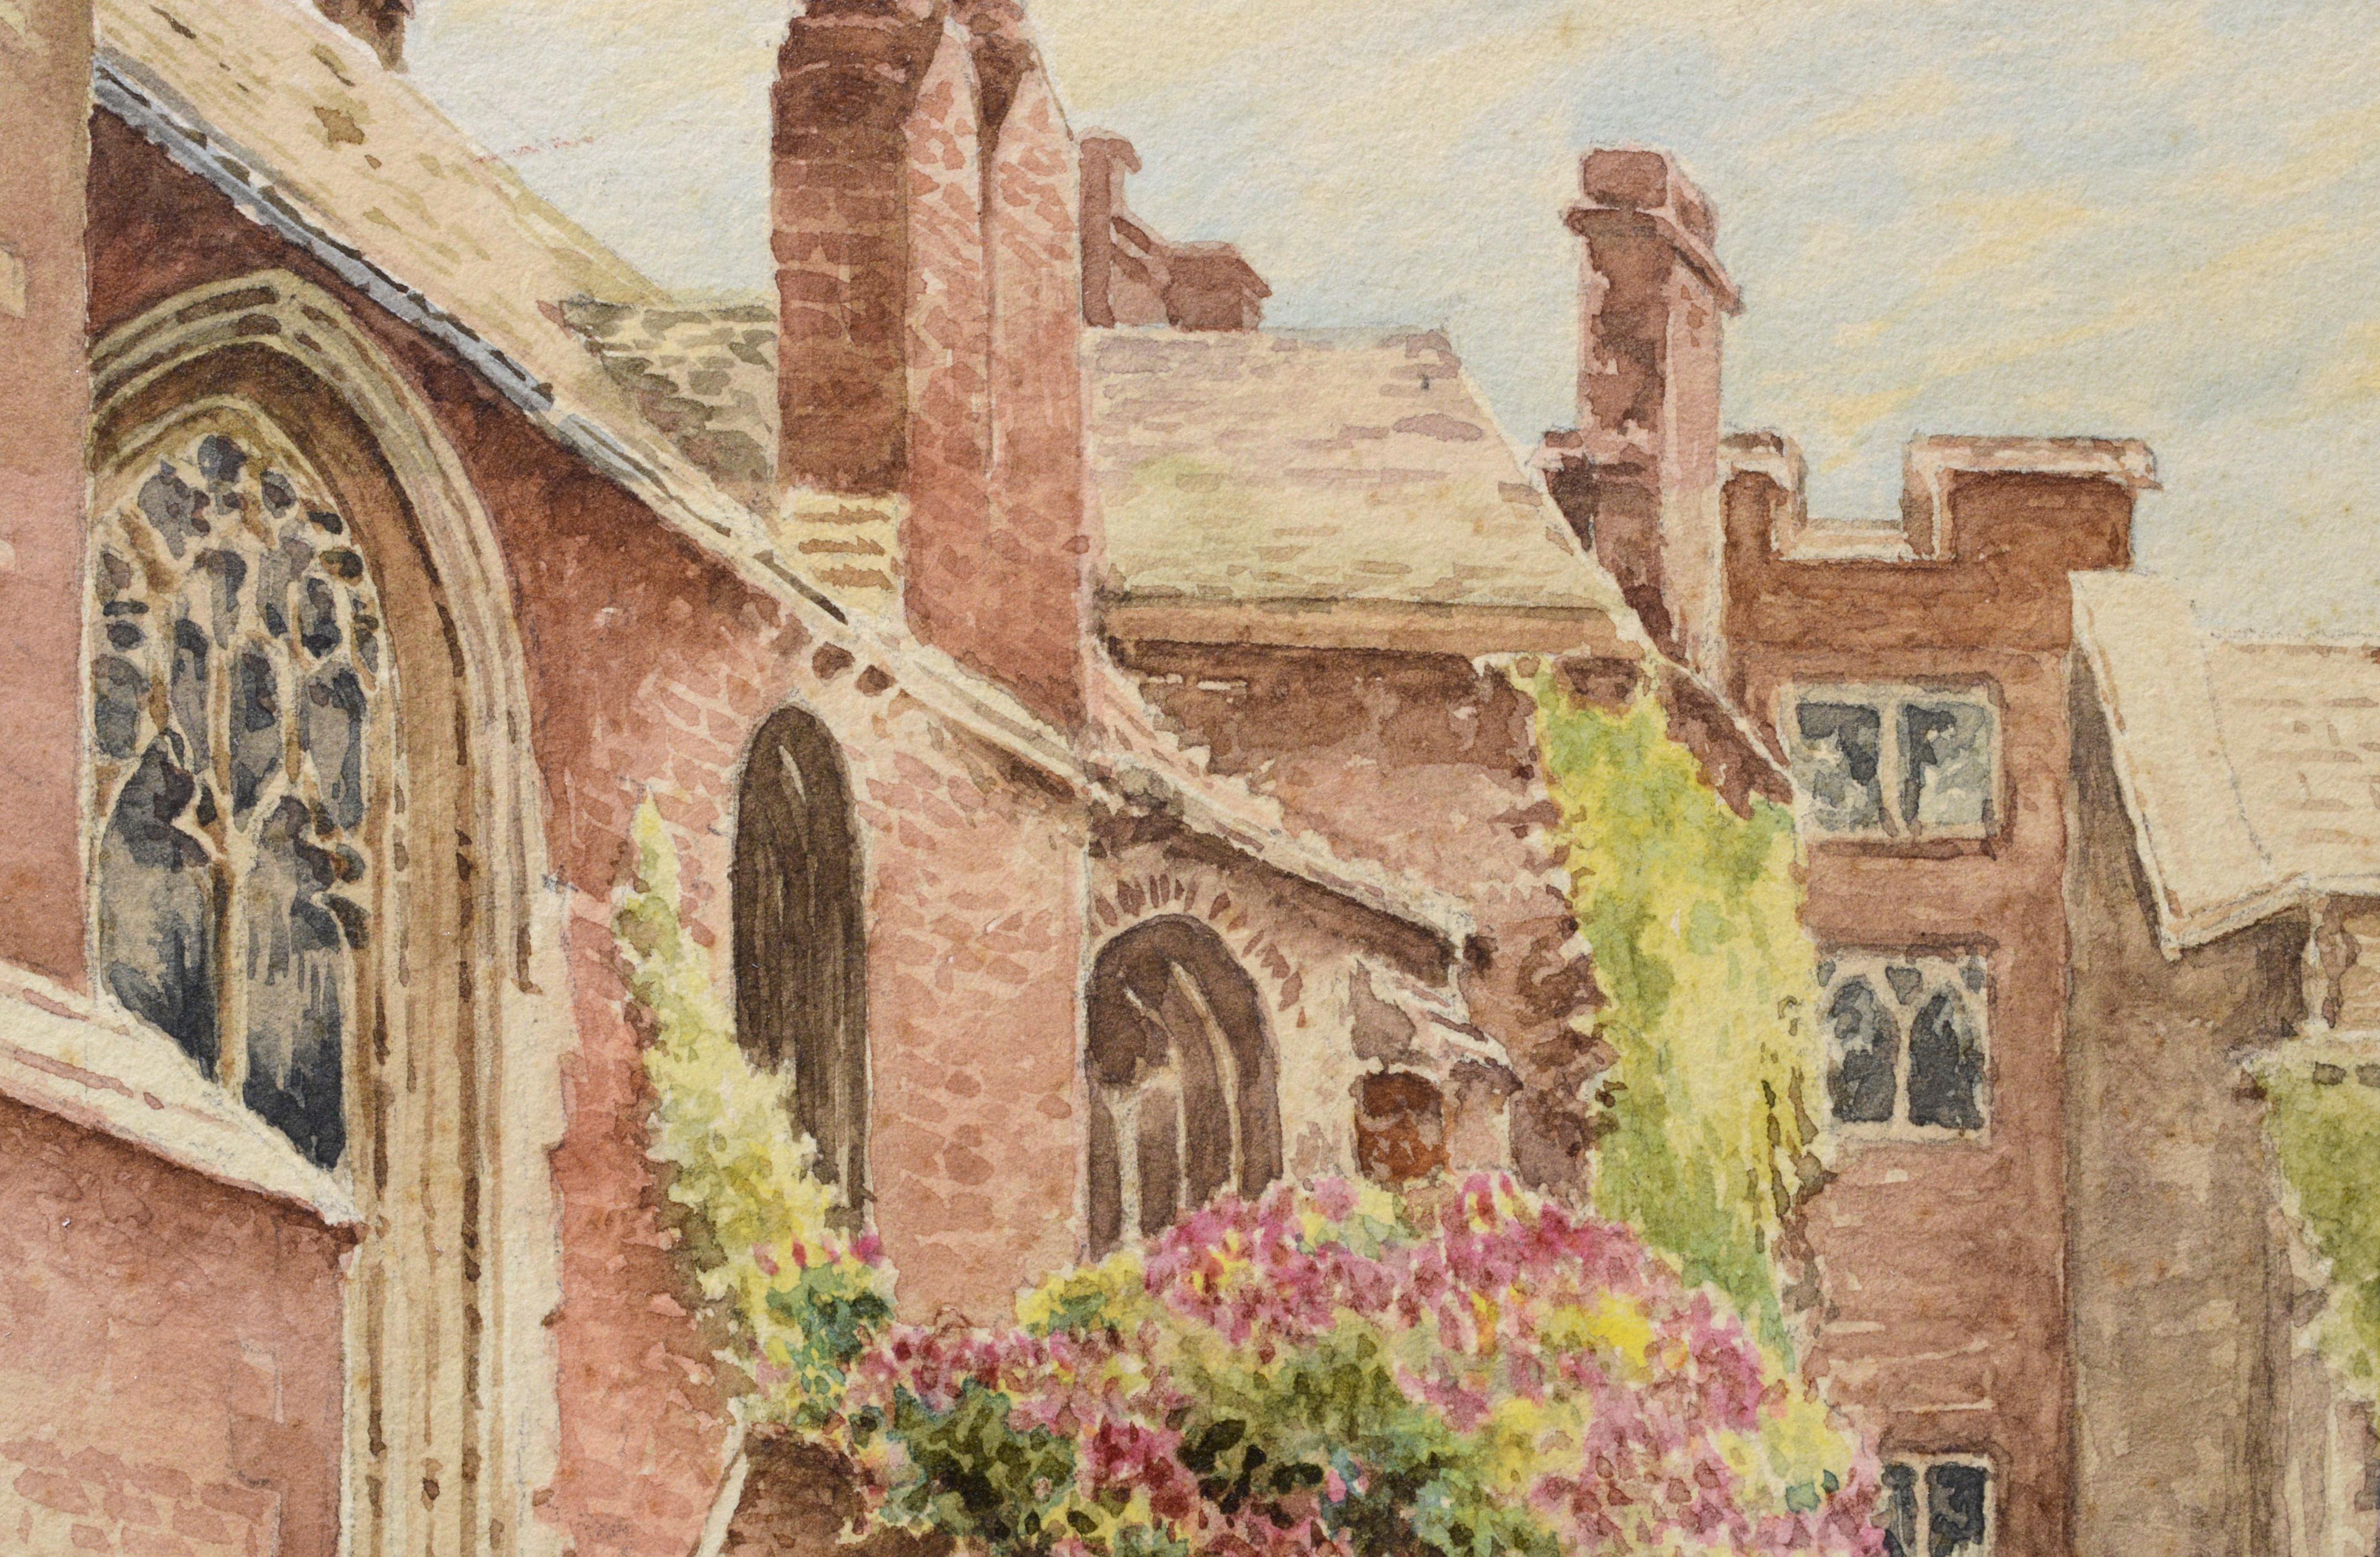 Late 19th Century Cathedral Courtyard Architectural Landscape w. Garden Flowers - Realist Art by William Truran